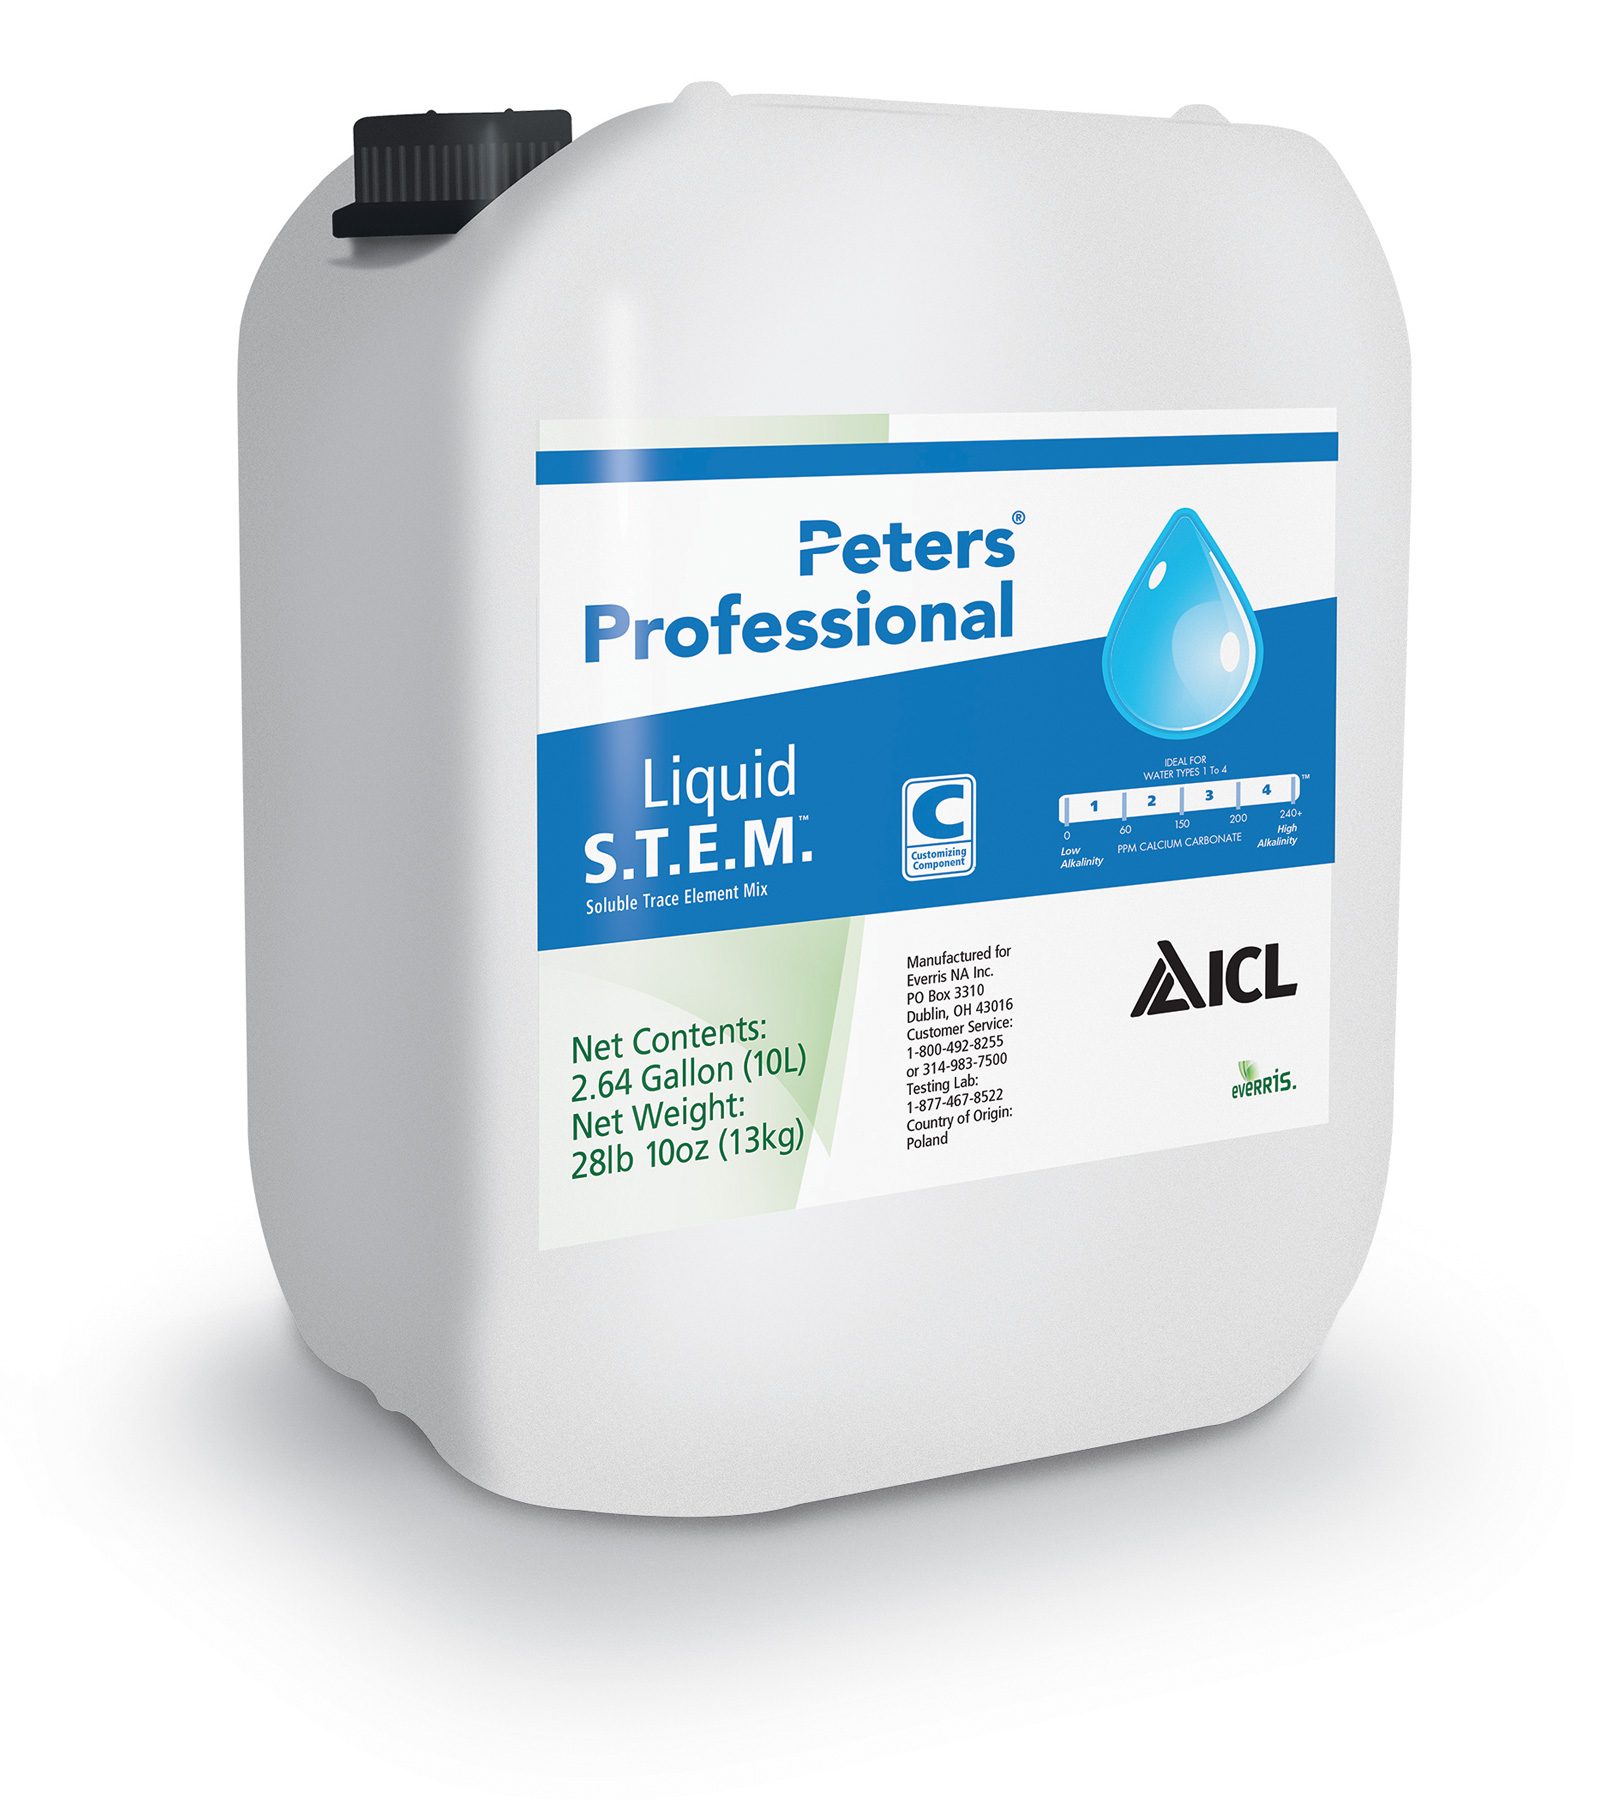 Peters Professional Liquid S.T.E.M. 2.64 Gallon Jug - Water Soluble Fertilizer